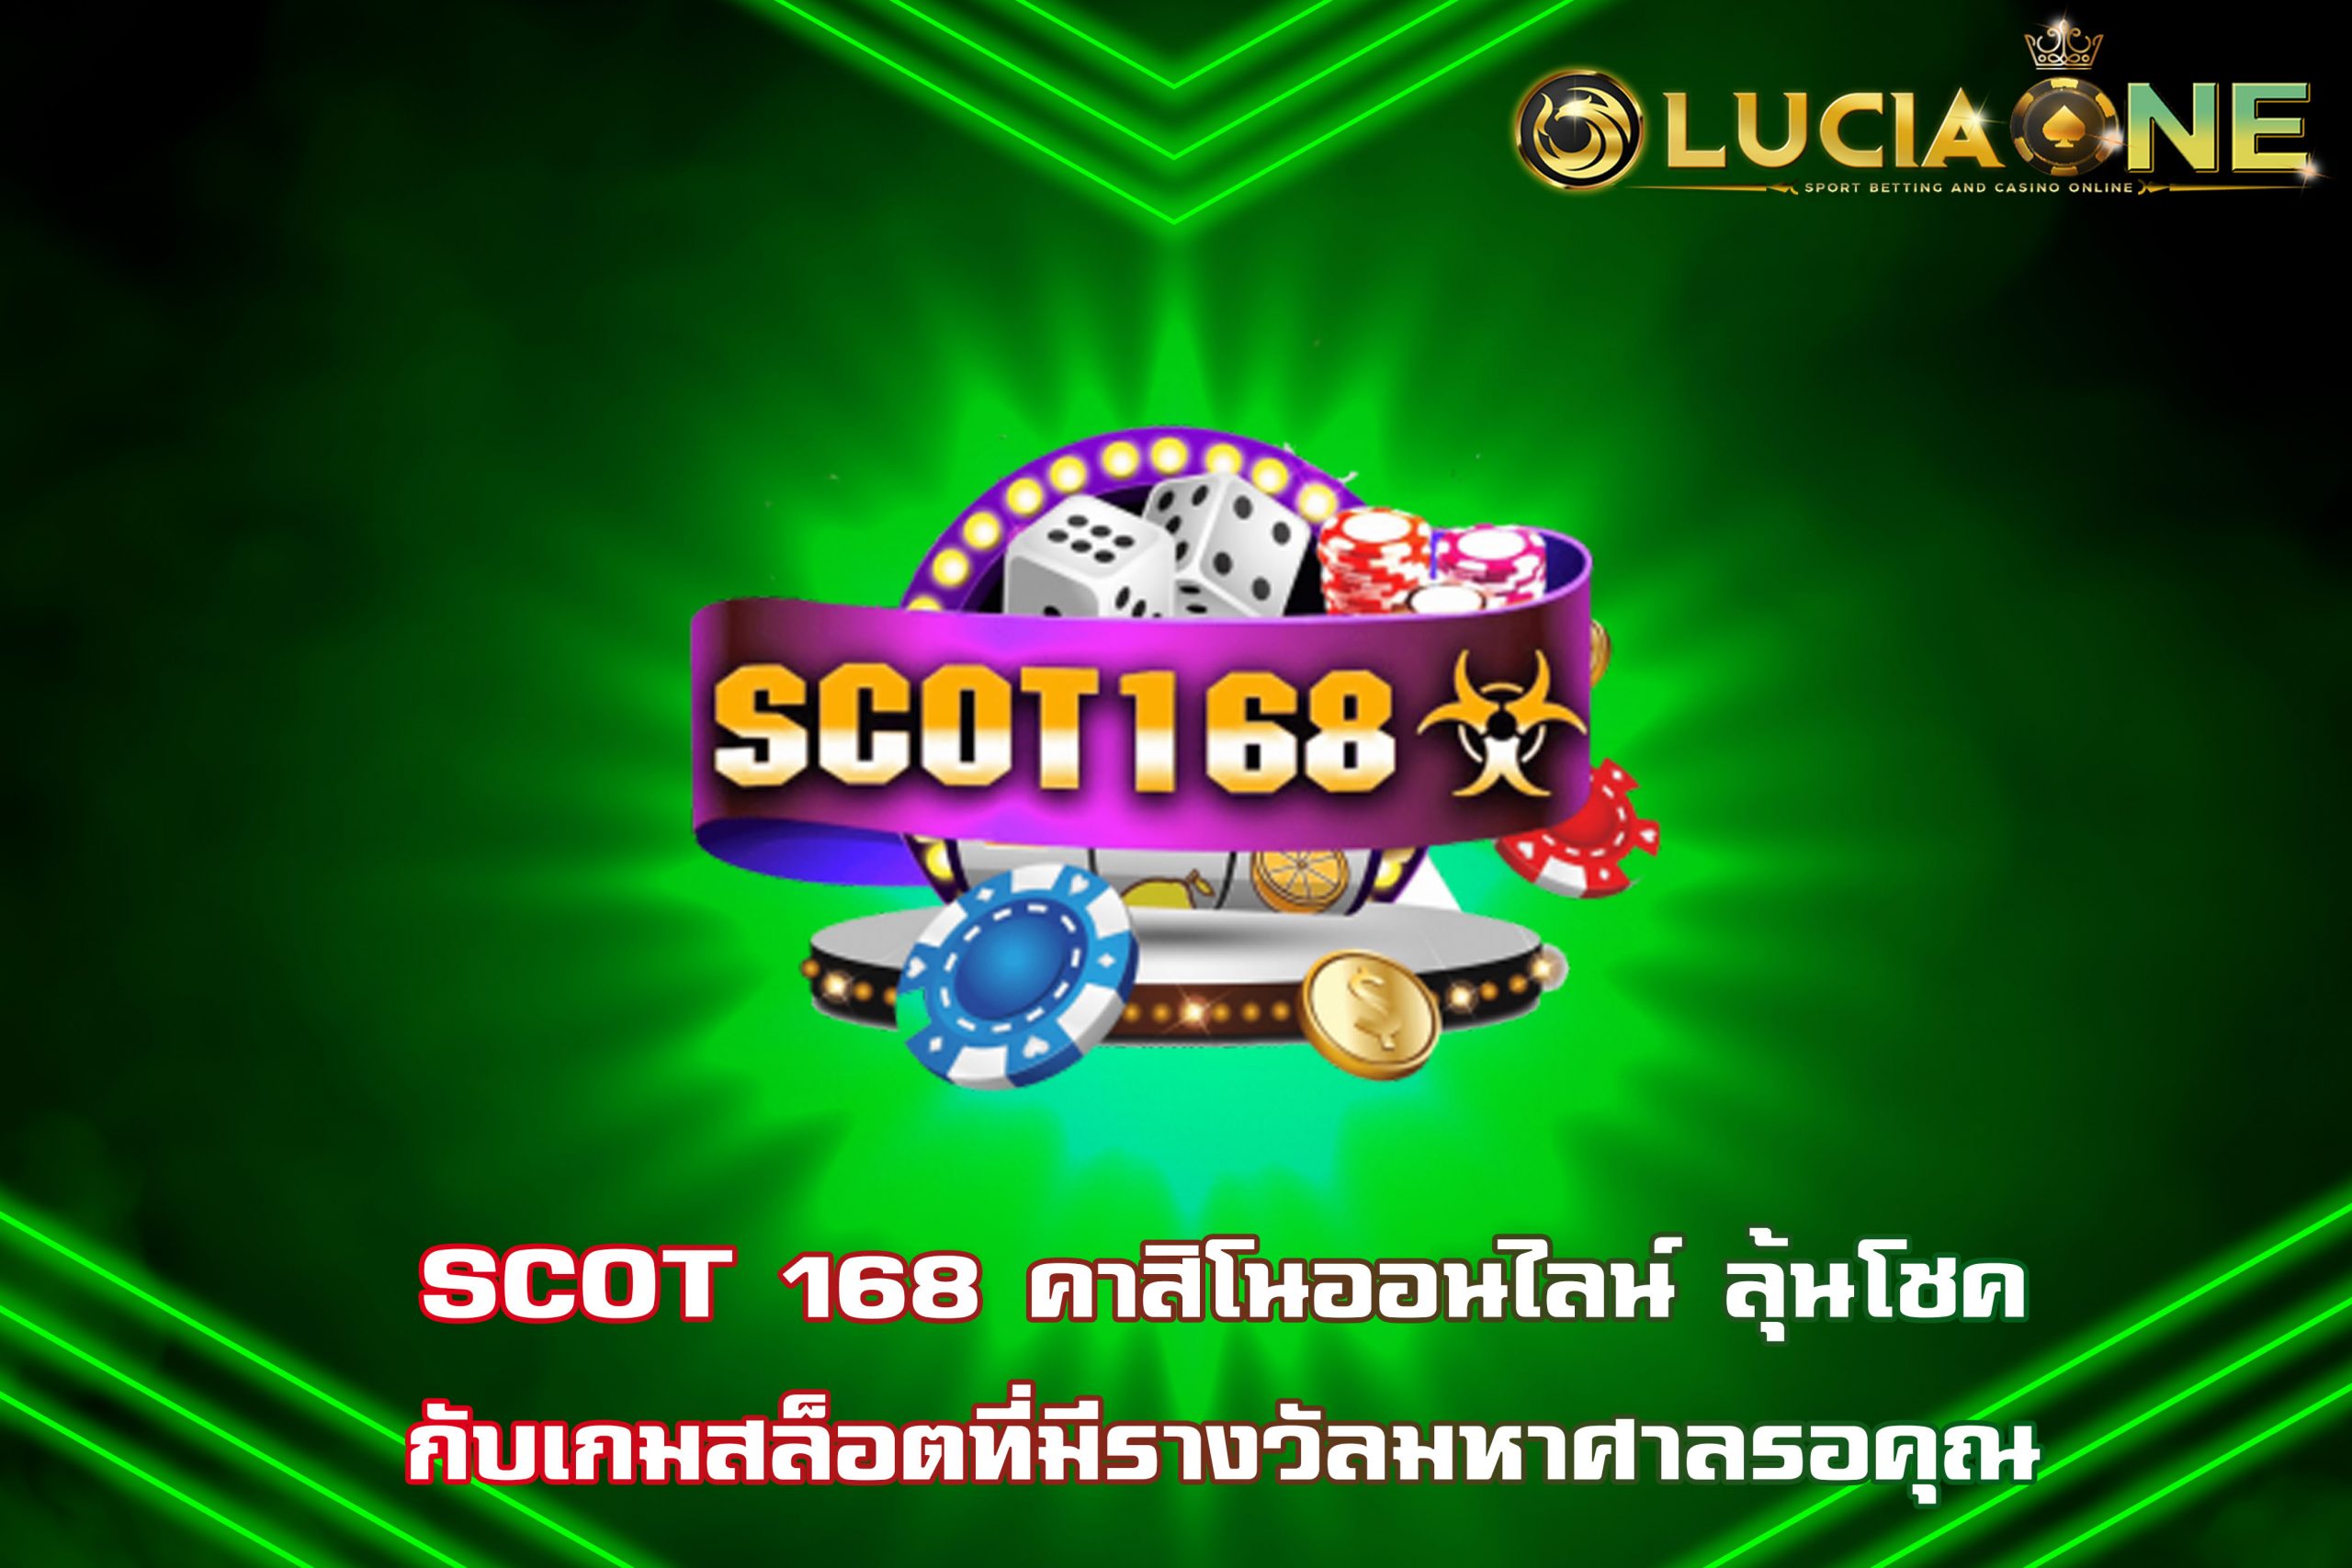 SCOT 168 คาสิโนออนไลน์ ลุ้นโชคกับเกมสล็อตที่มีรางวัลมหาศาลรอคุณ